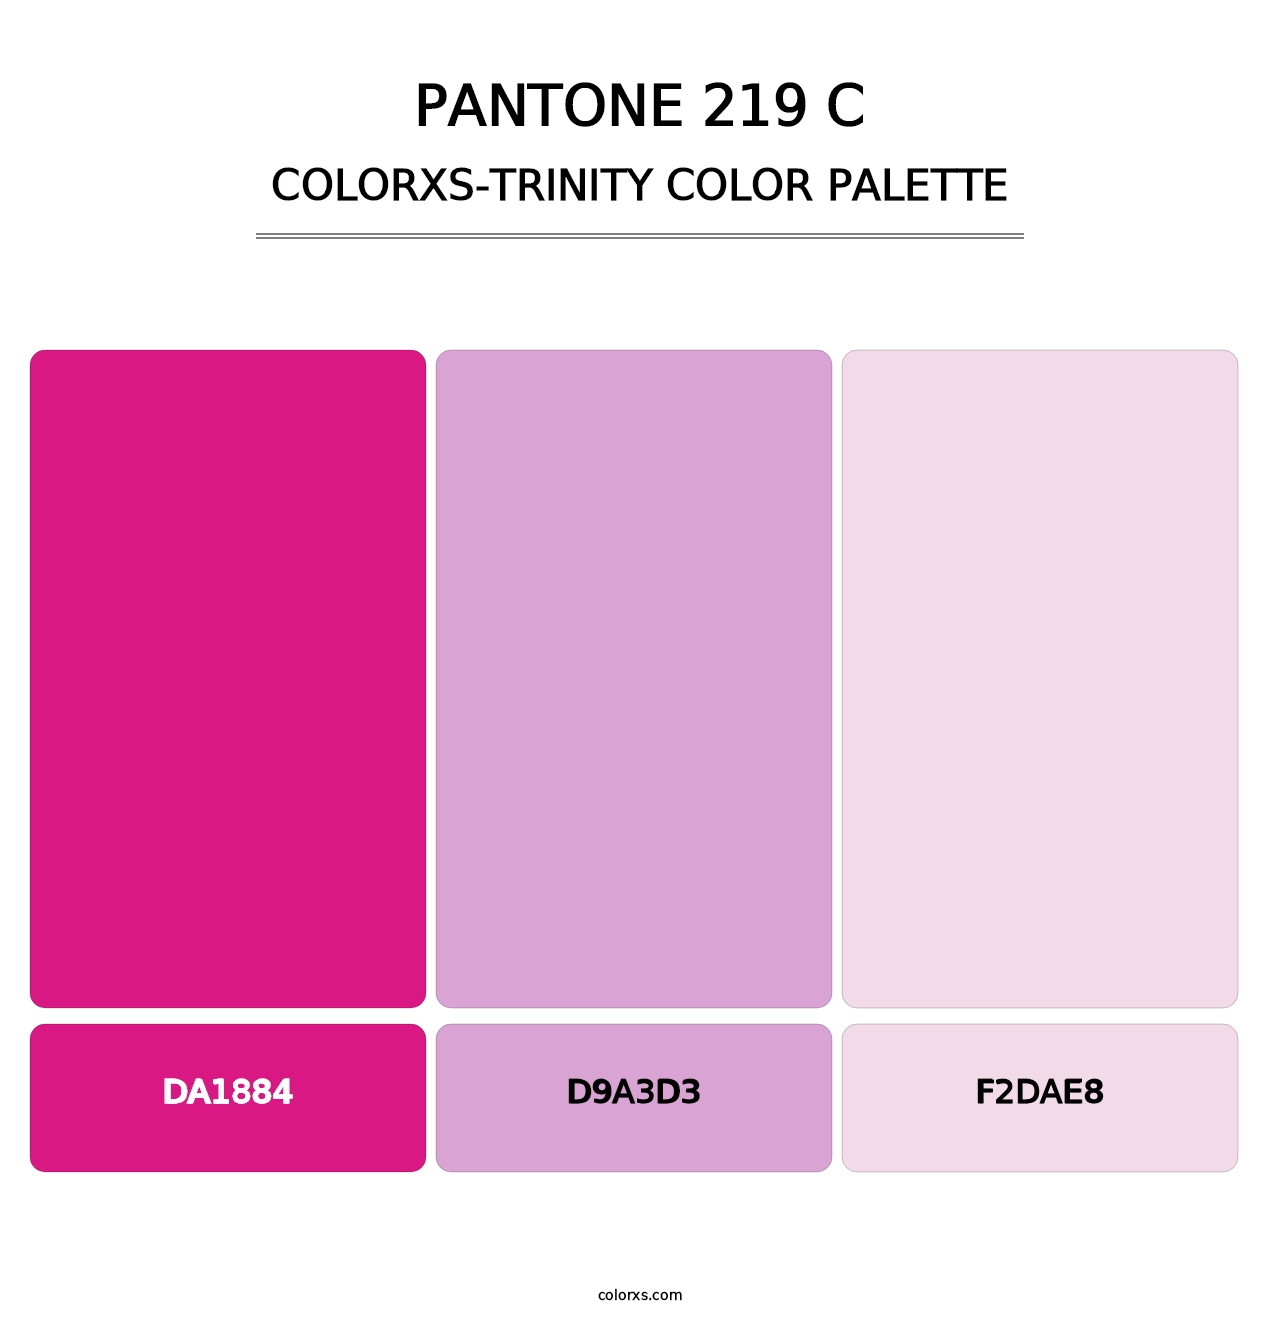 PANTONE 219 C - Colorxs Trinity Palette